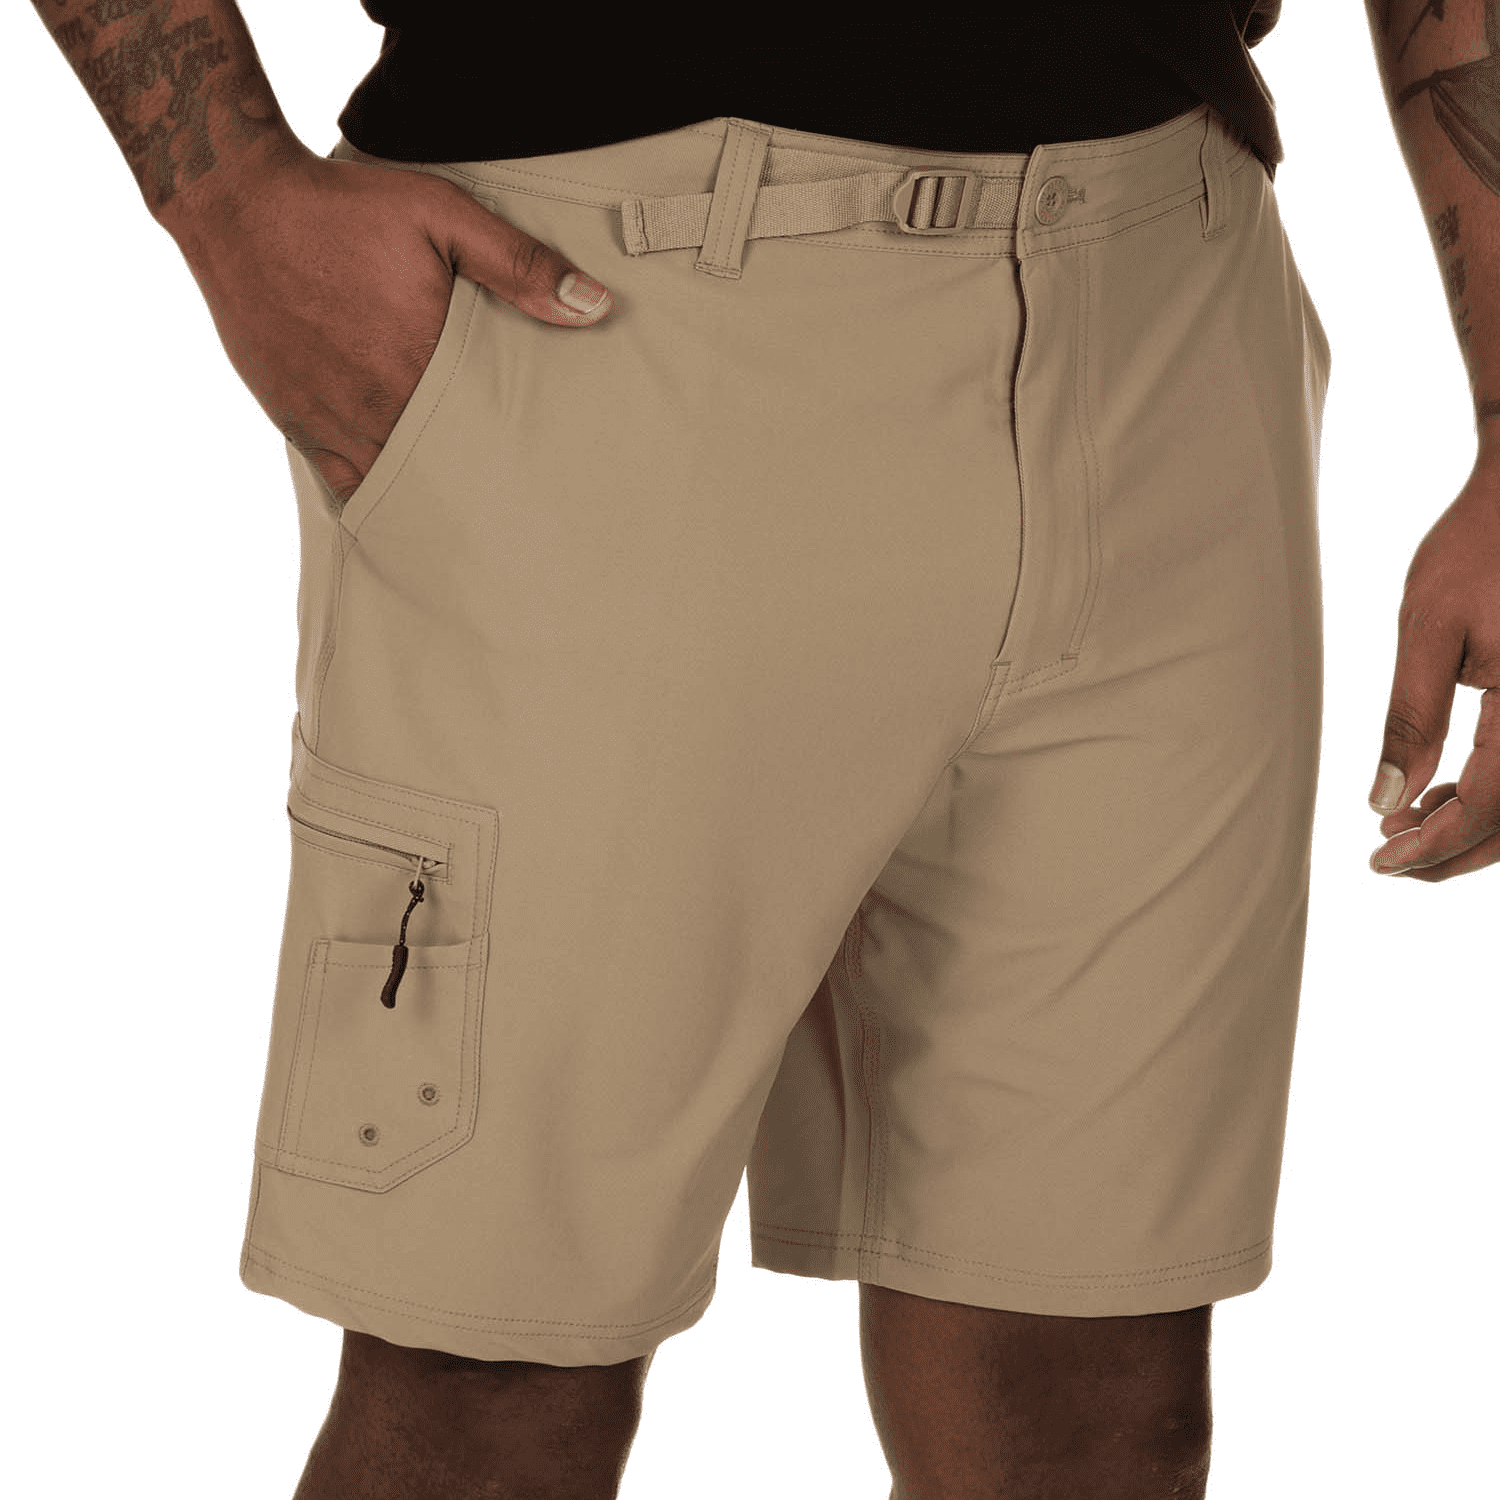 Realtree Men's Performance Hybrid Fishing Shorts, Size: XL (40/42), Gray